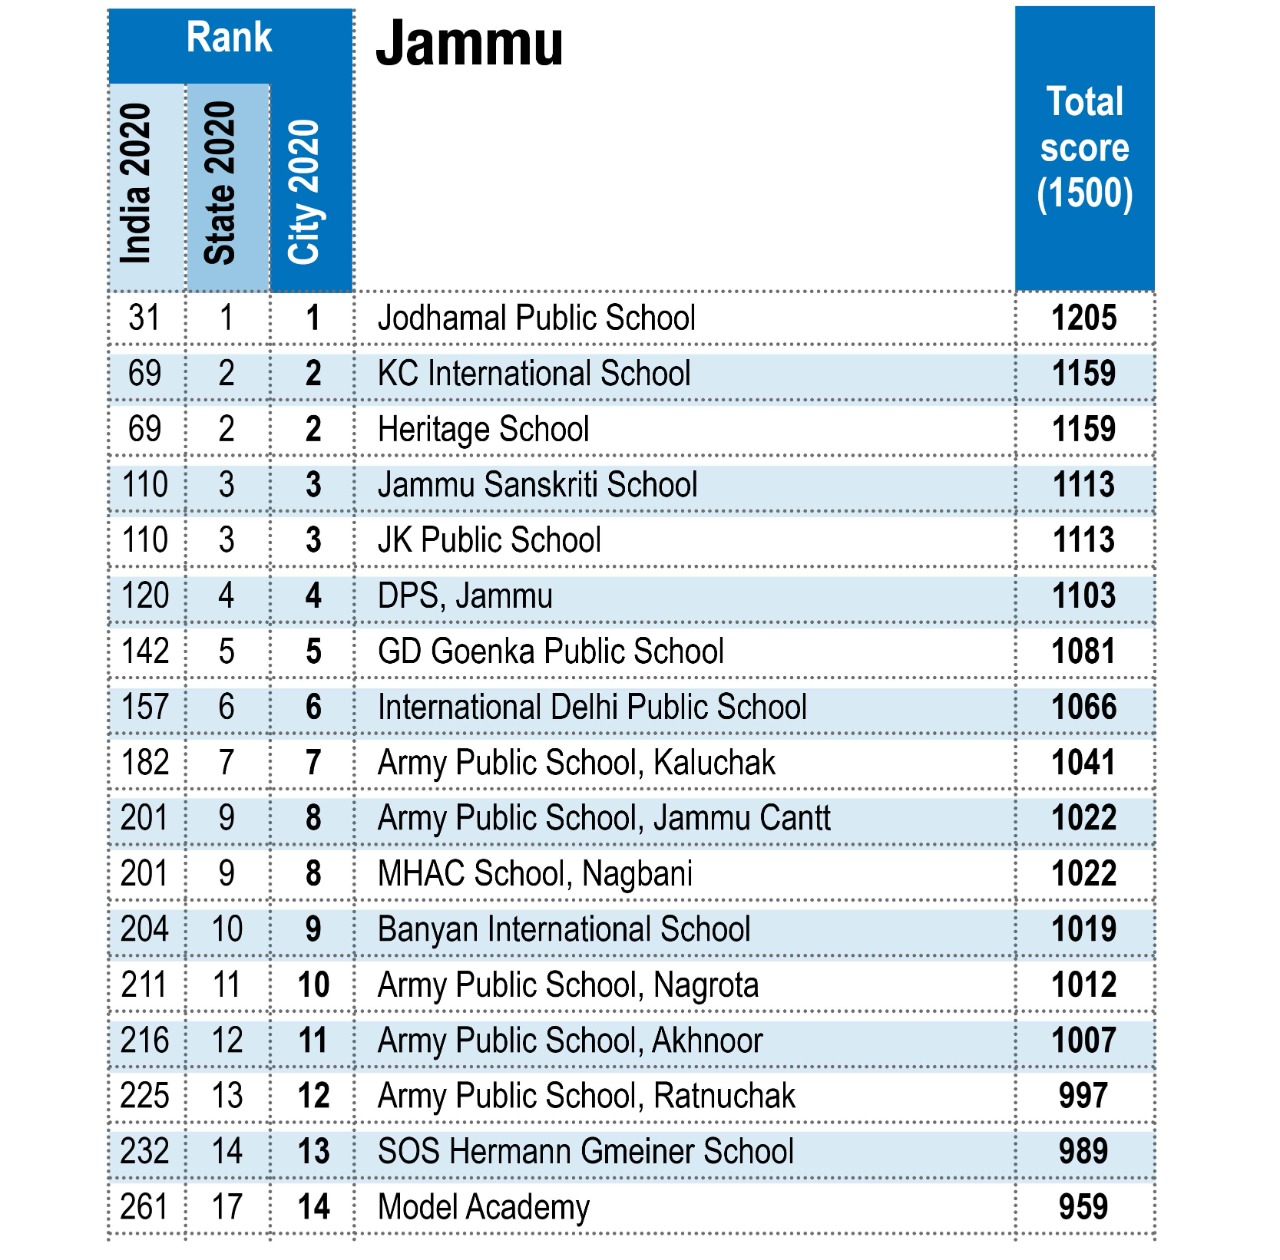 Jammu Co-ed Day School City Rankings 2020-21